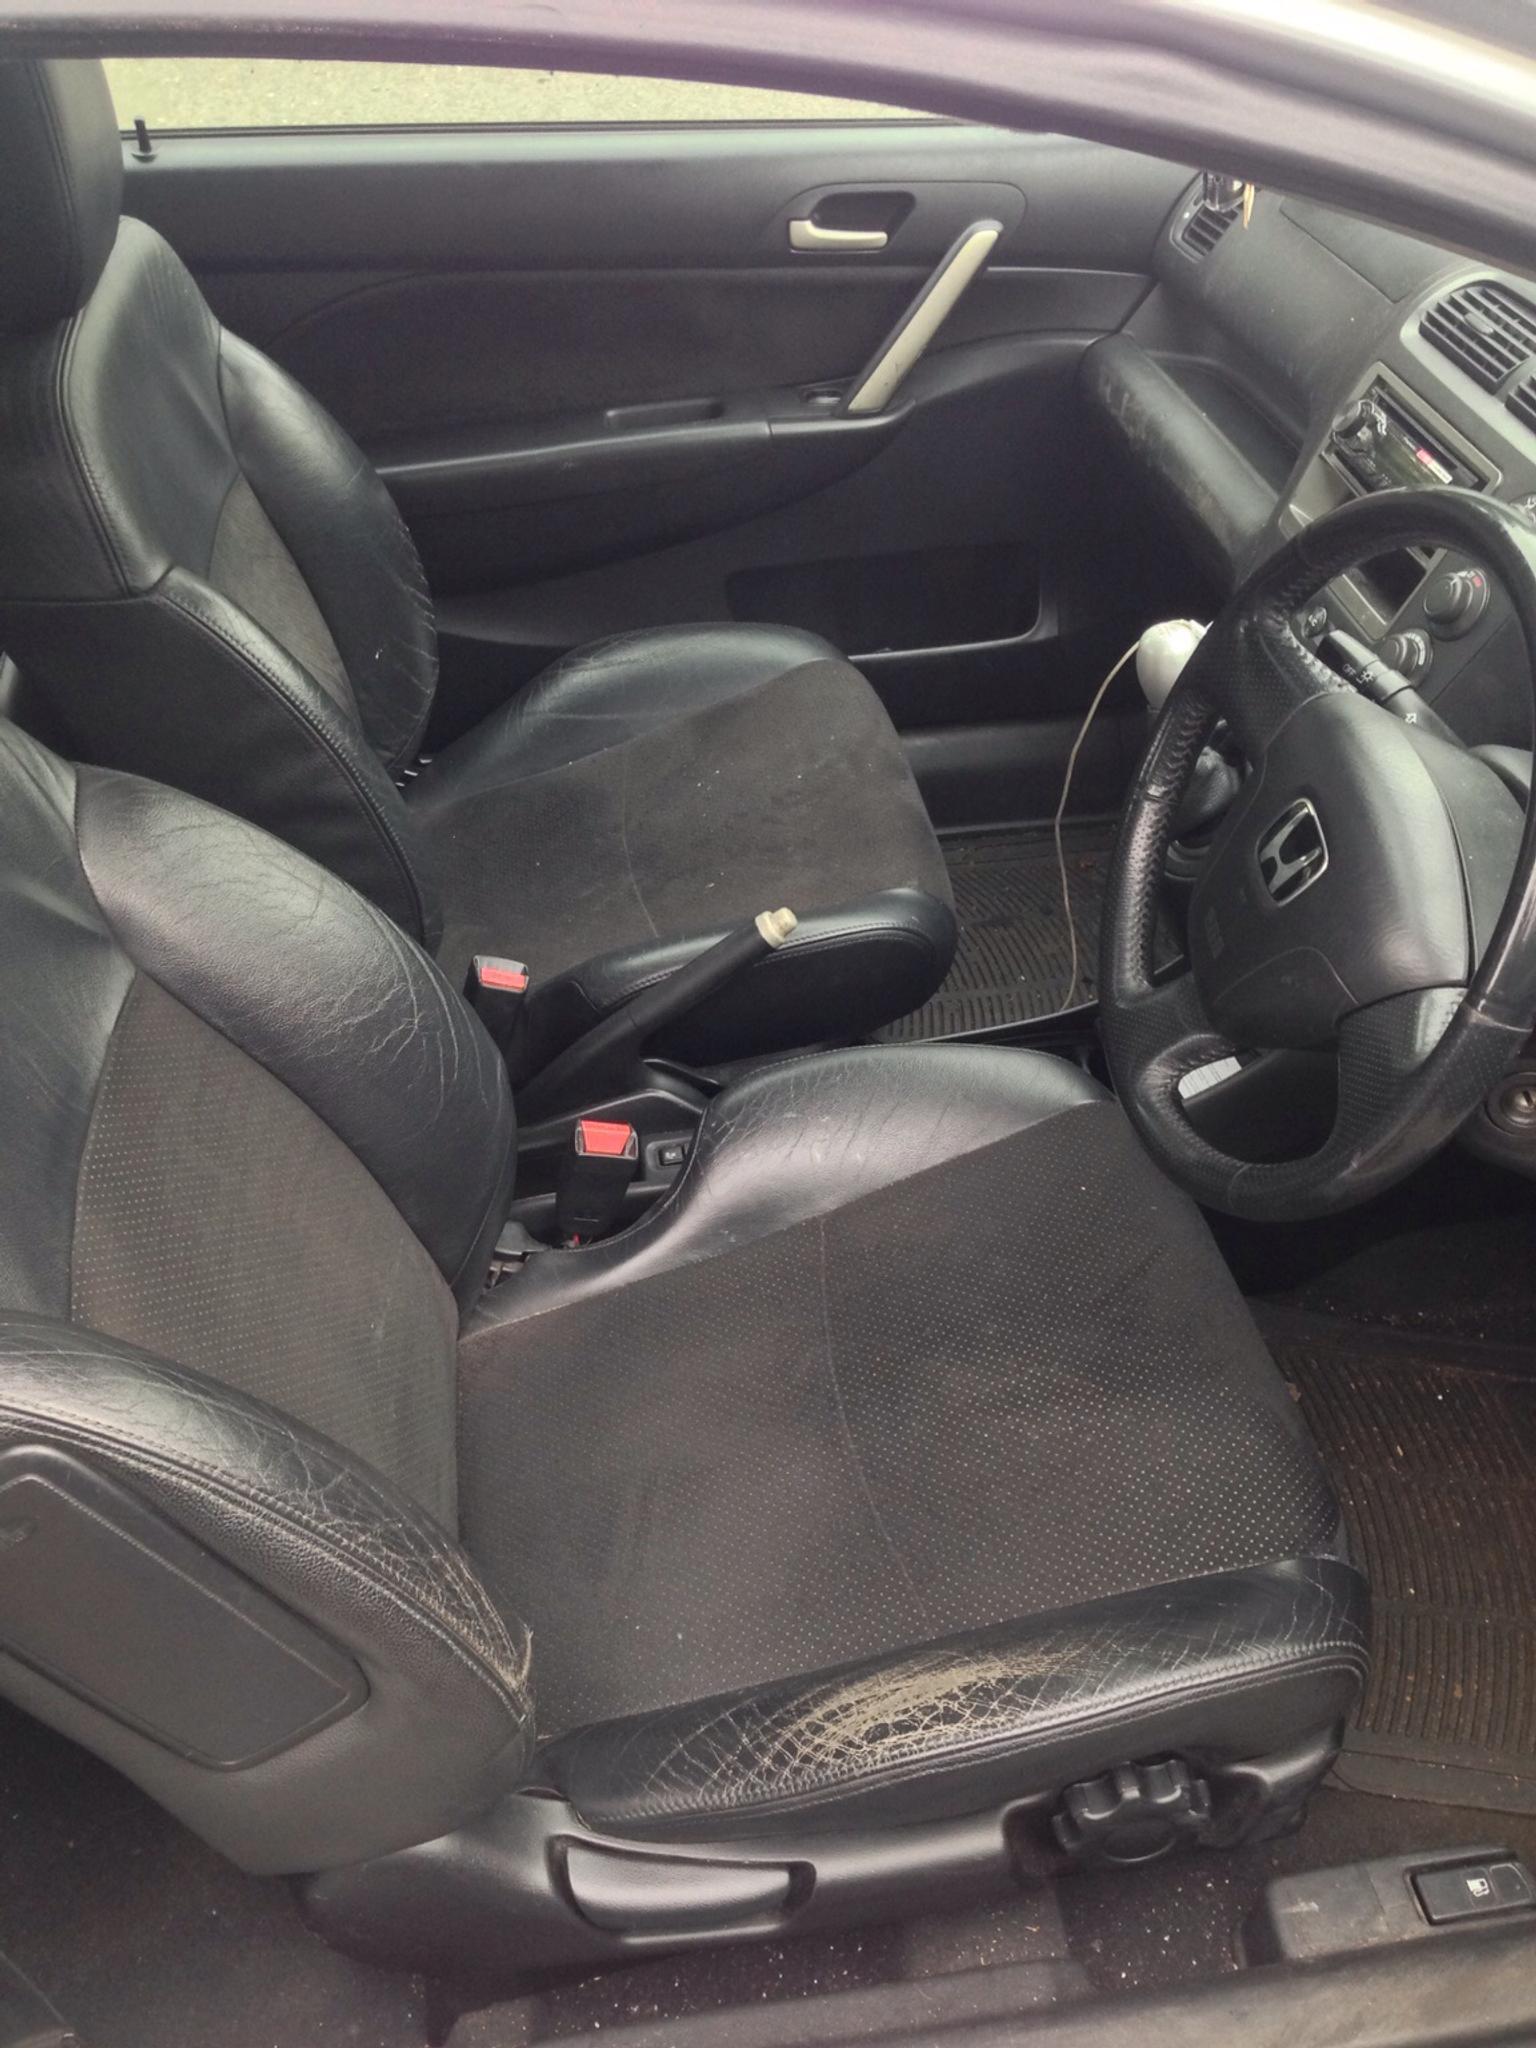 Honda Civic Ep3 2 Half Leather Interior In B9 Green Fur 80